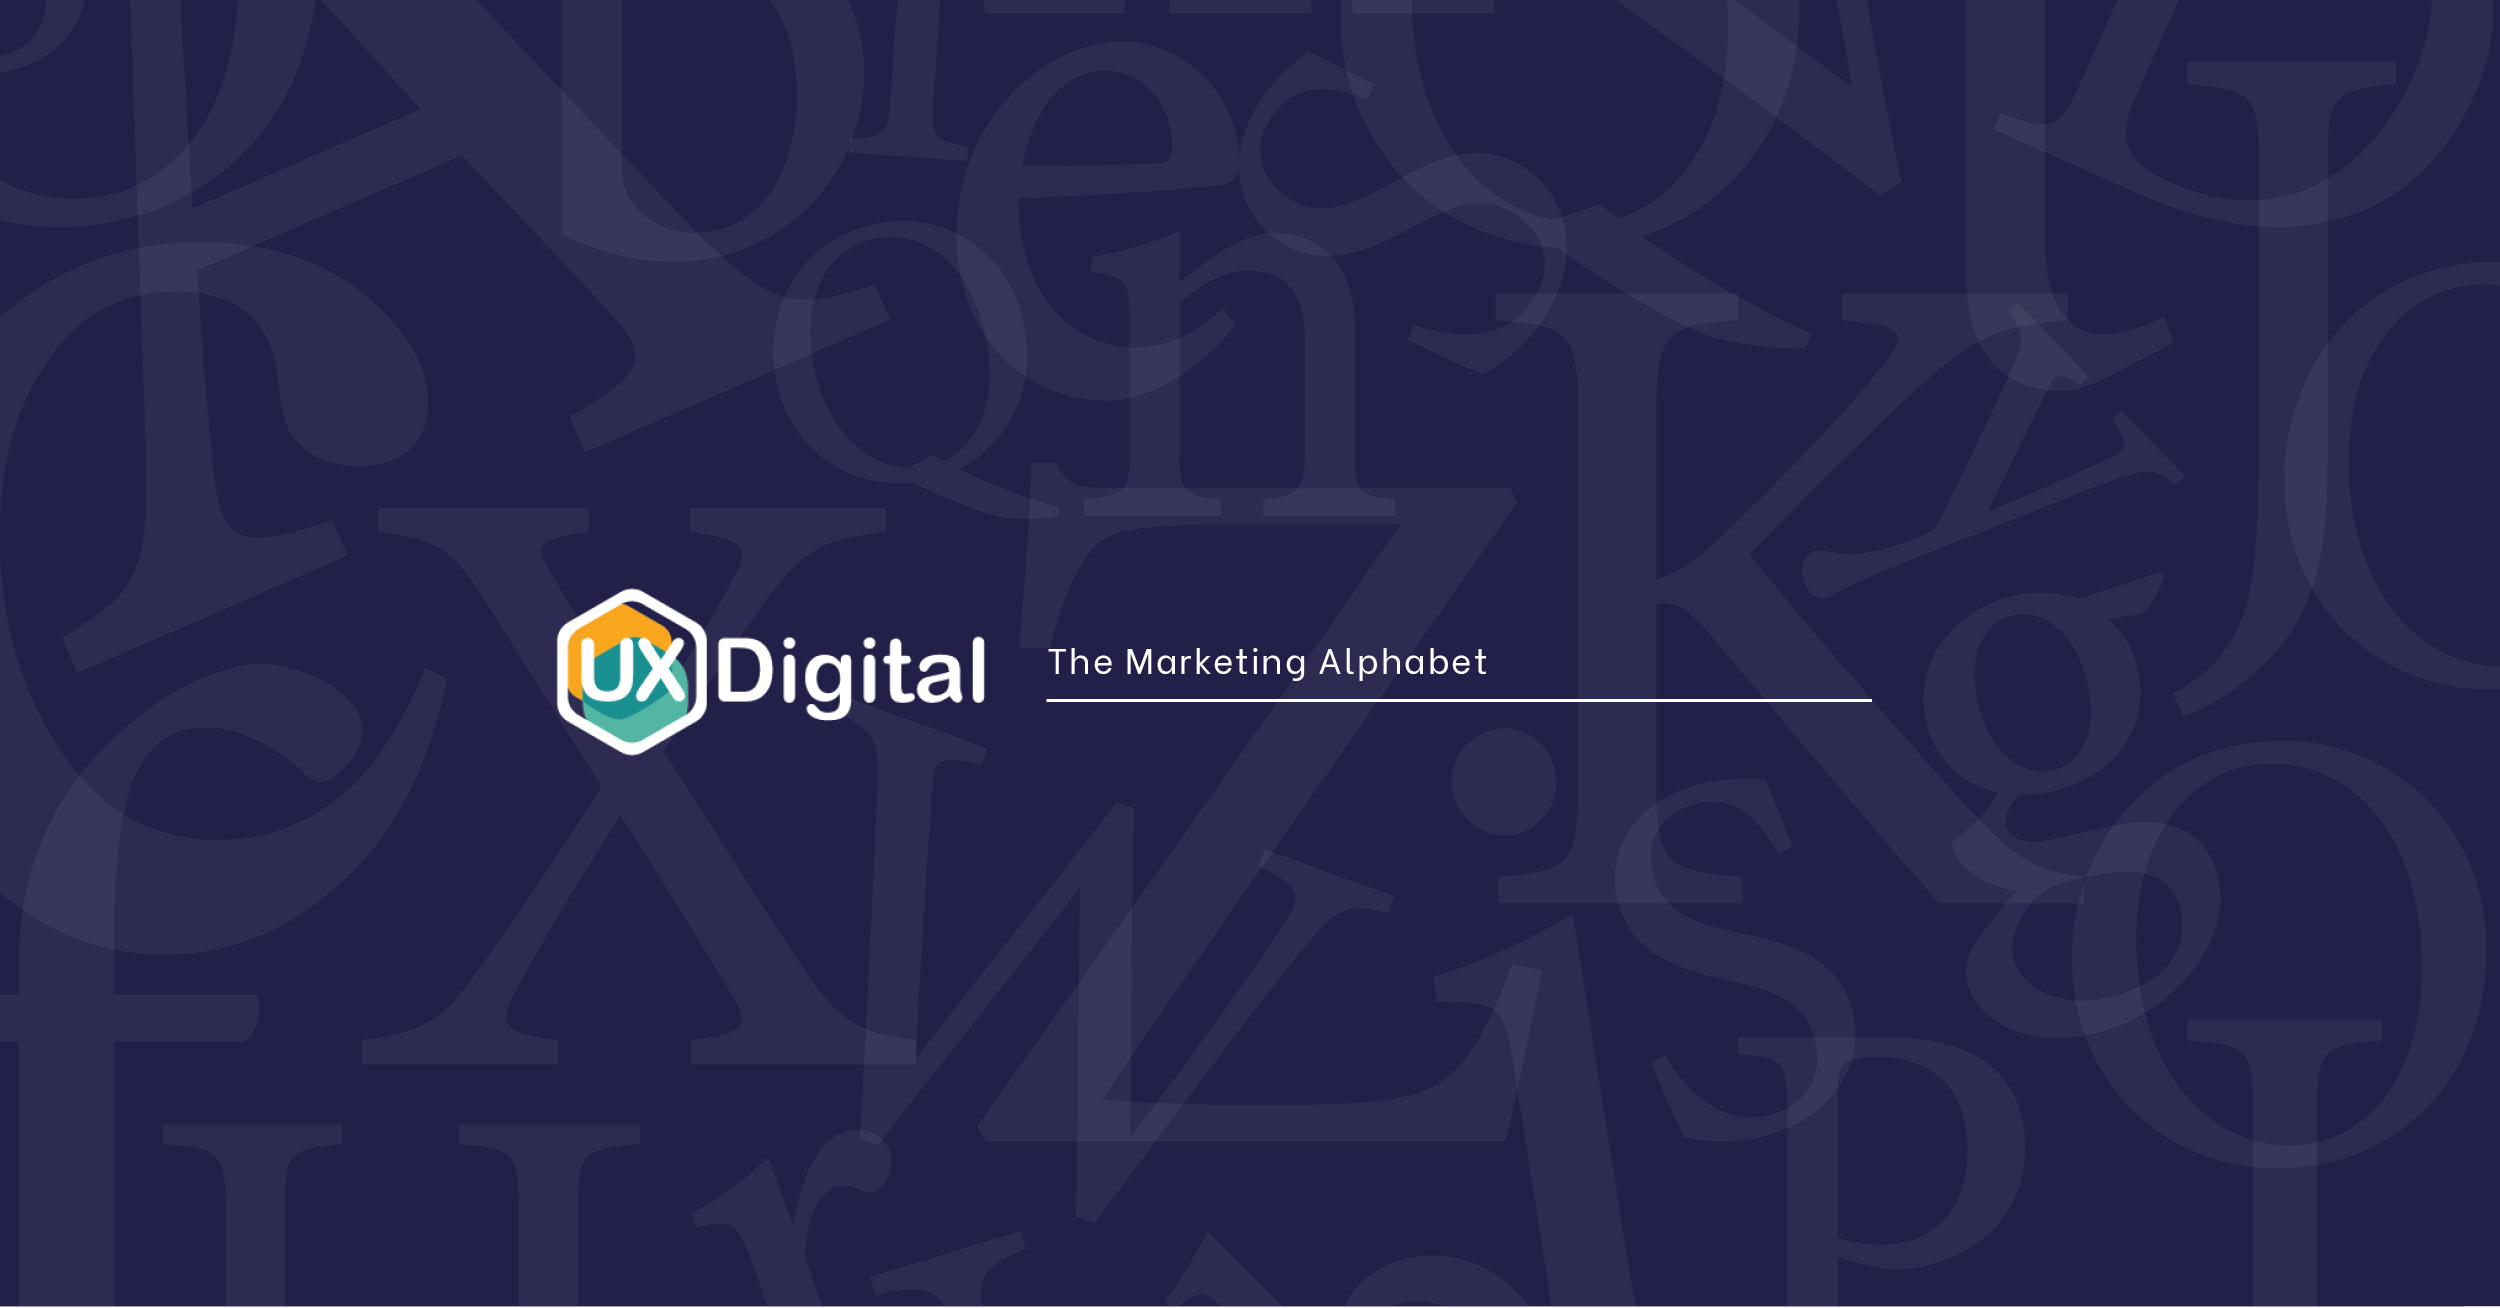 UX-Digital: The Marketing Alphabet